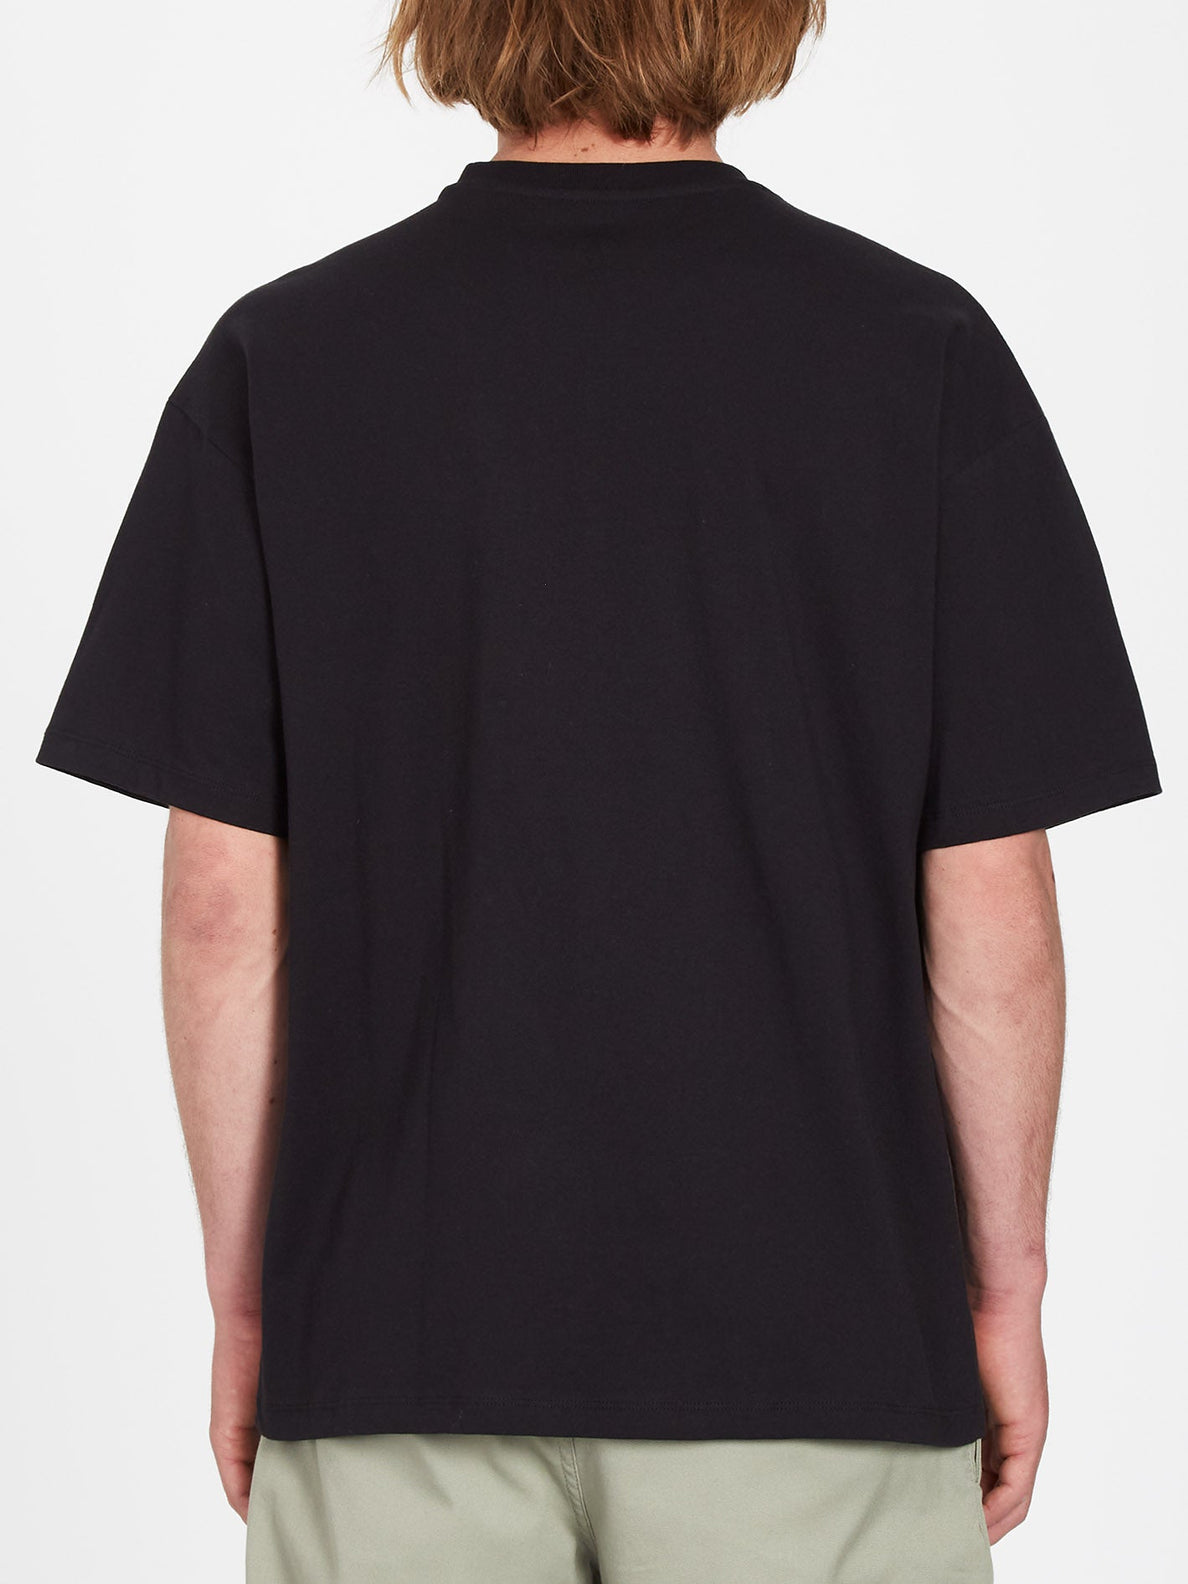 Camiseta Volcom Crossworld - Black | Camisetas de hombre | Camisetas manga corta de hombre | Volcom Shop | surfdevils.com